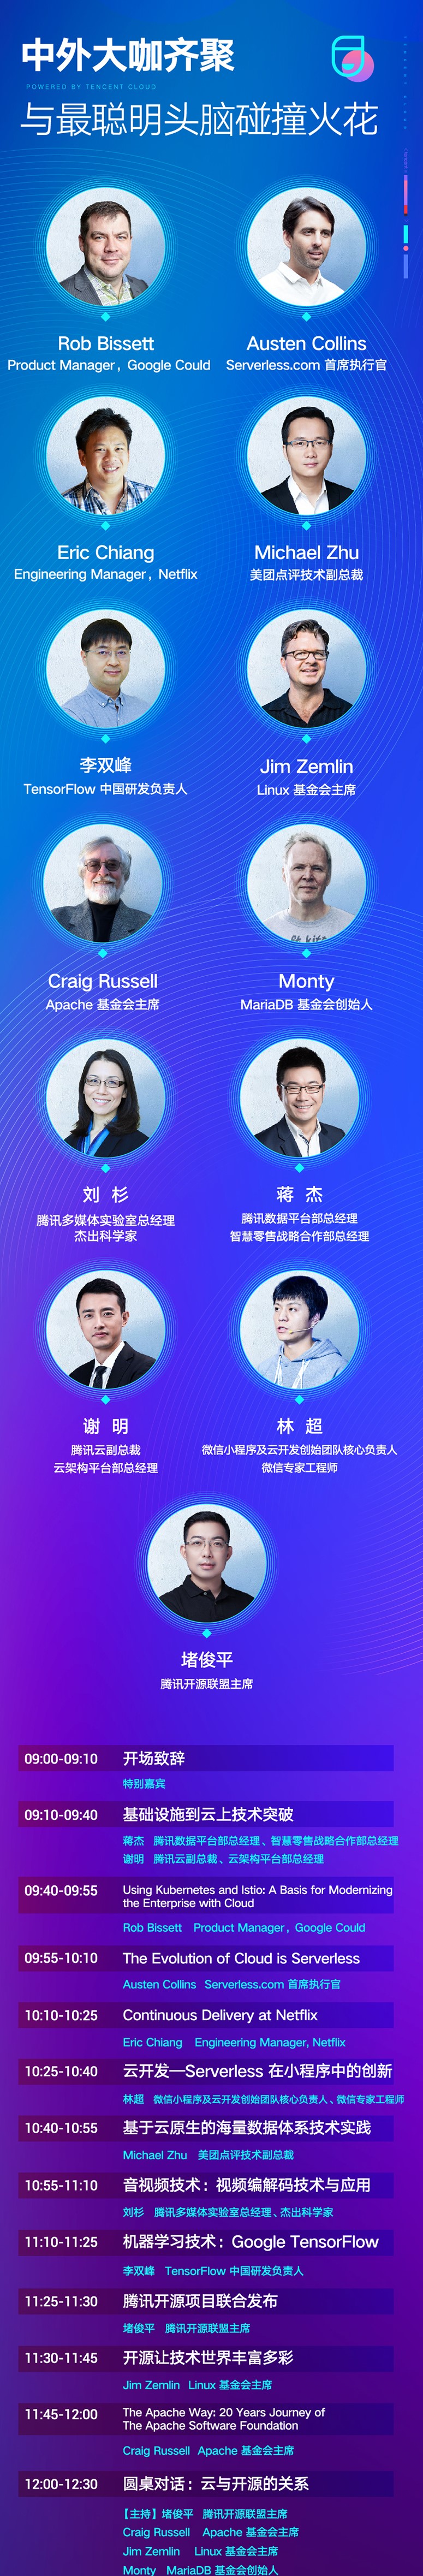 2019 Techo开发者大会（北京）